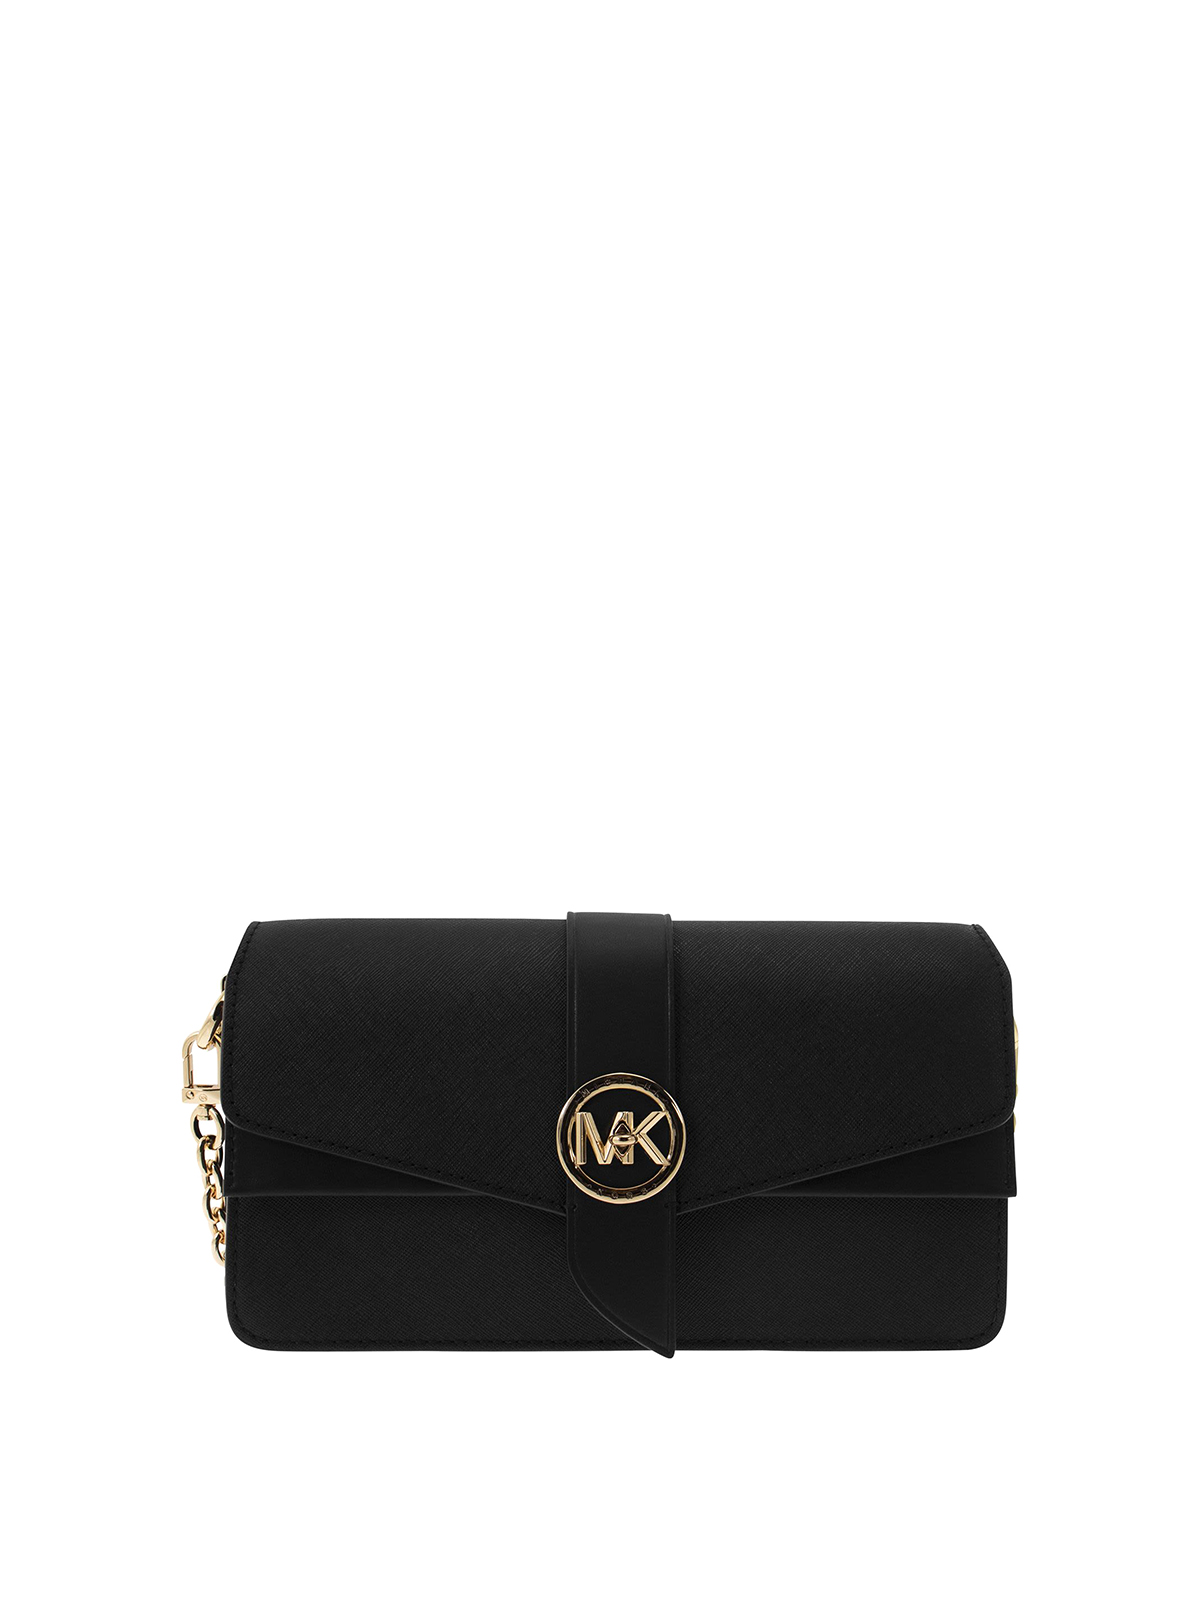 Michael Kors Ladies Greenwich Medium Saffiano Leather Shoulder Bag - Black  30H1GGRL2L-001 194900930854 - Handbags - Jomashop